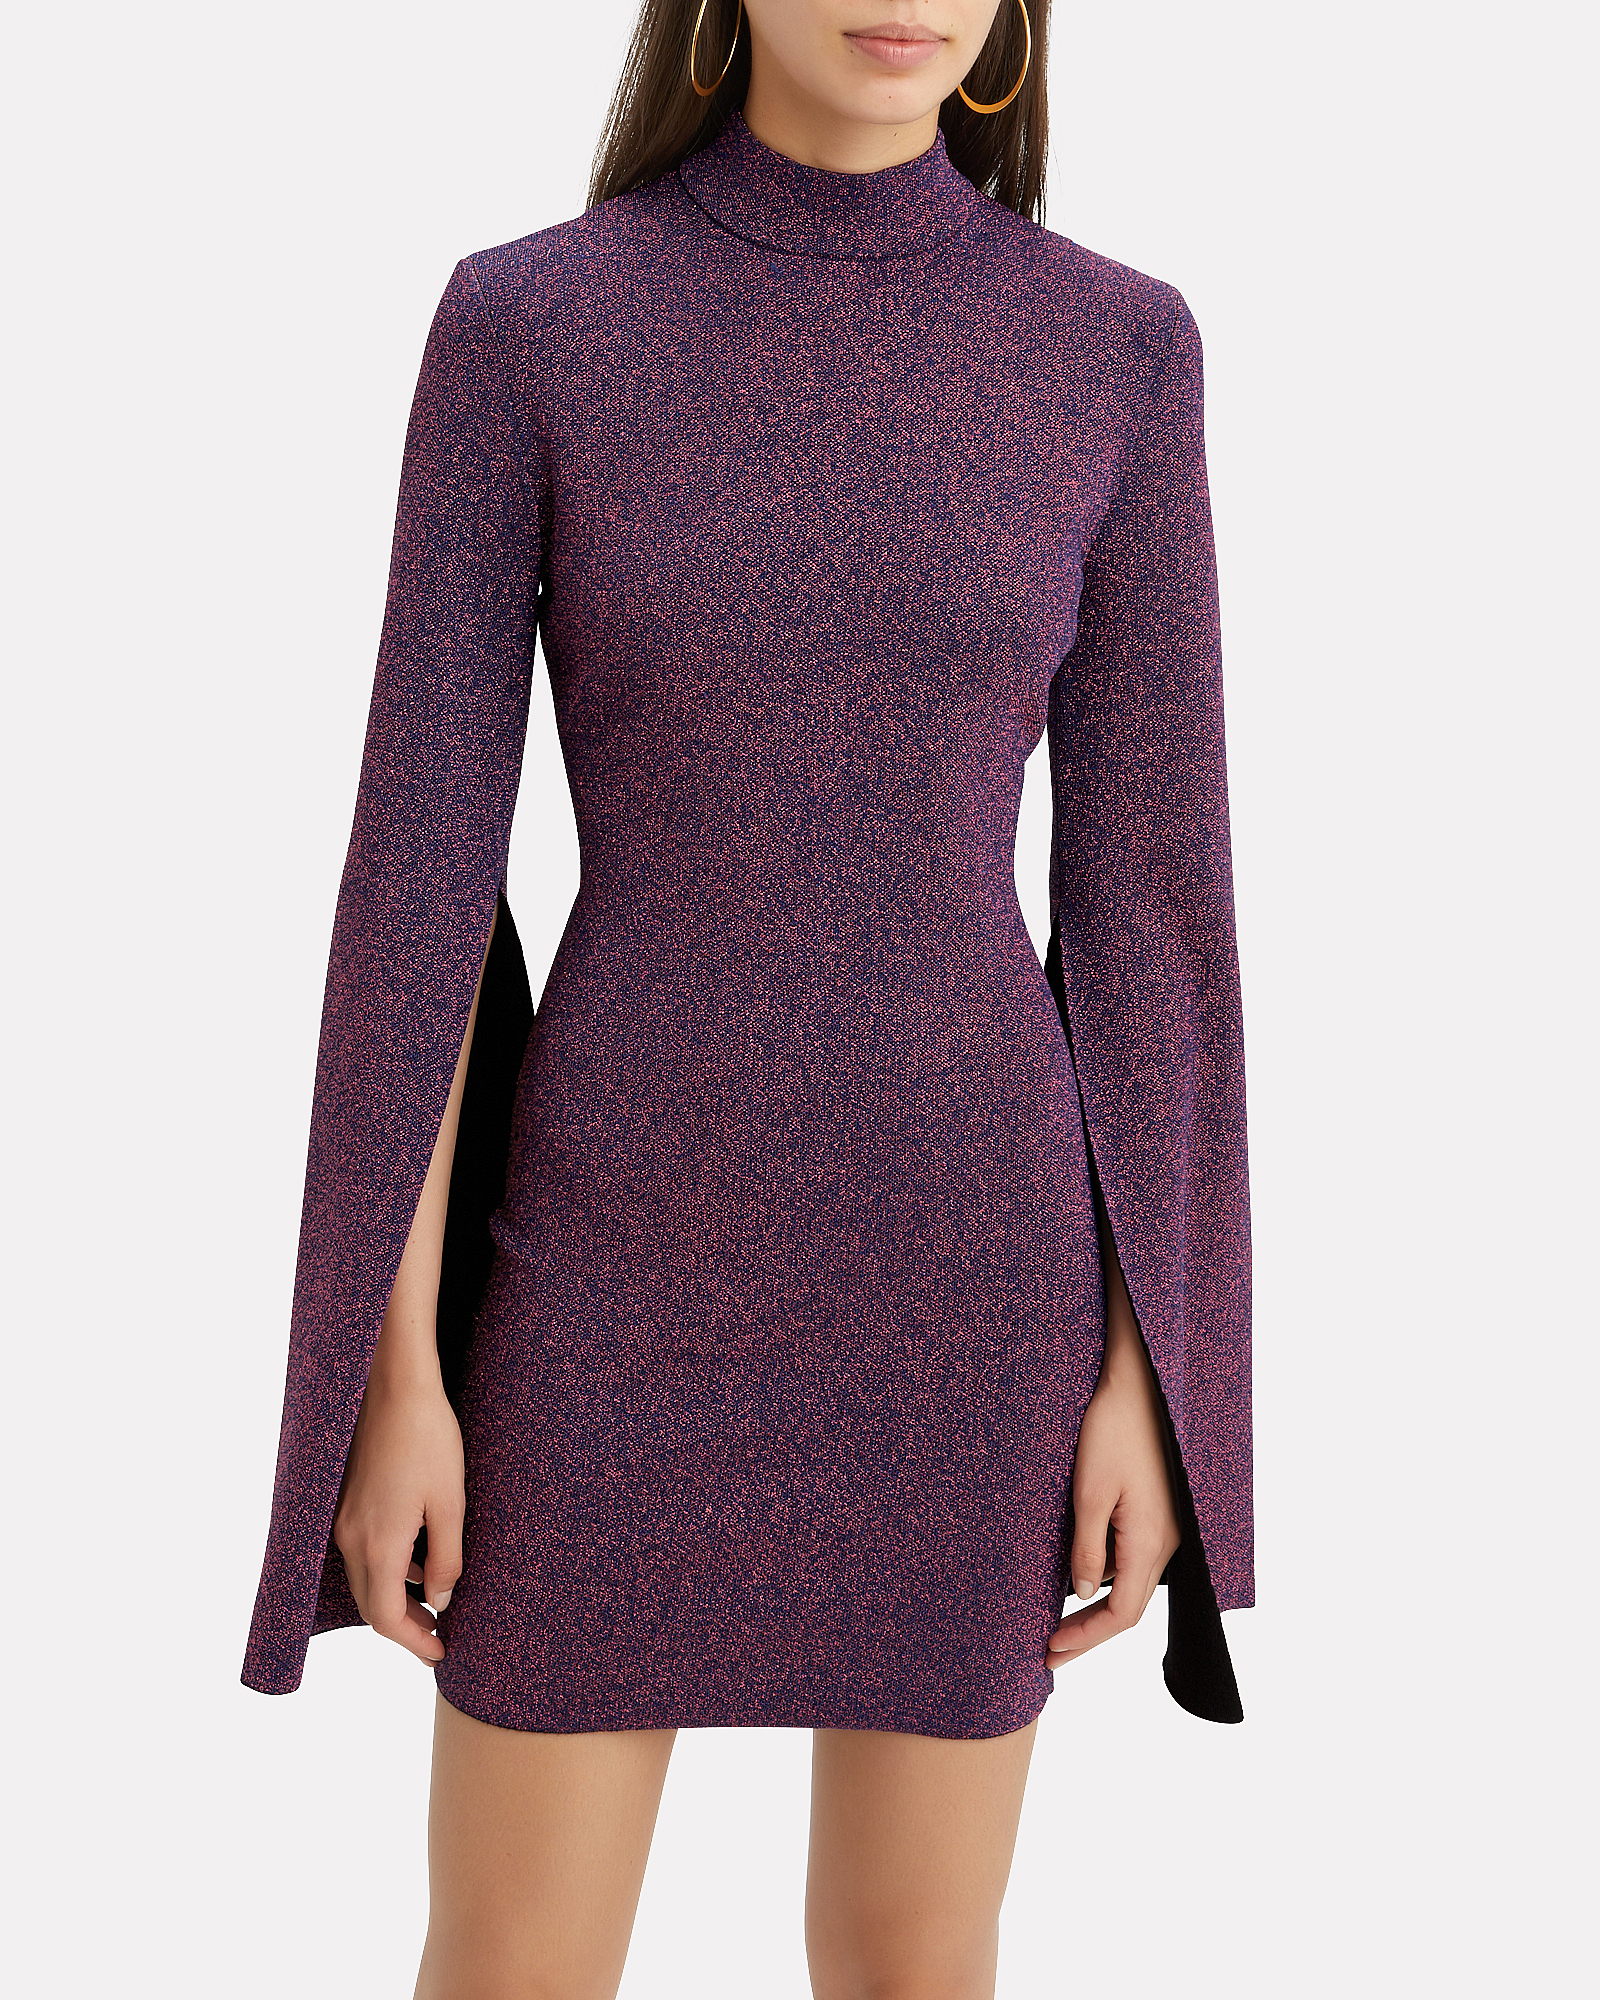 Purple knit dress